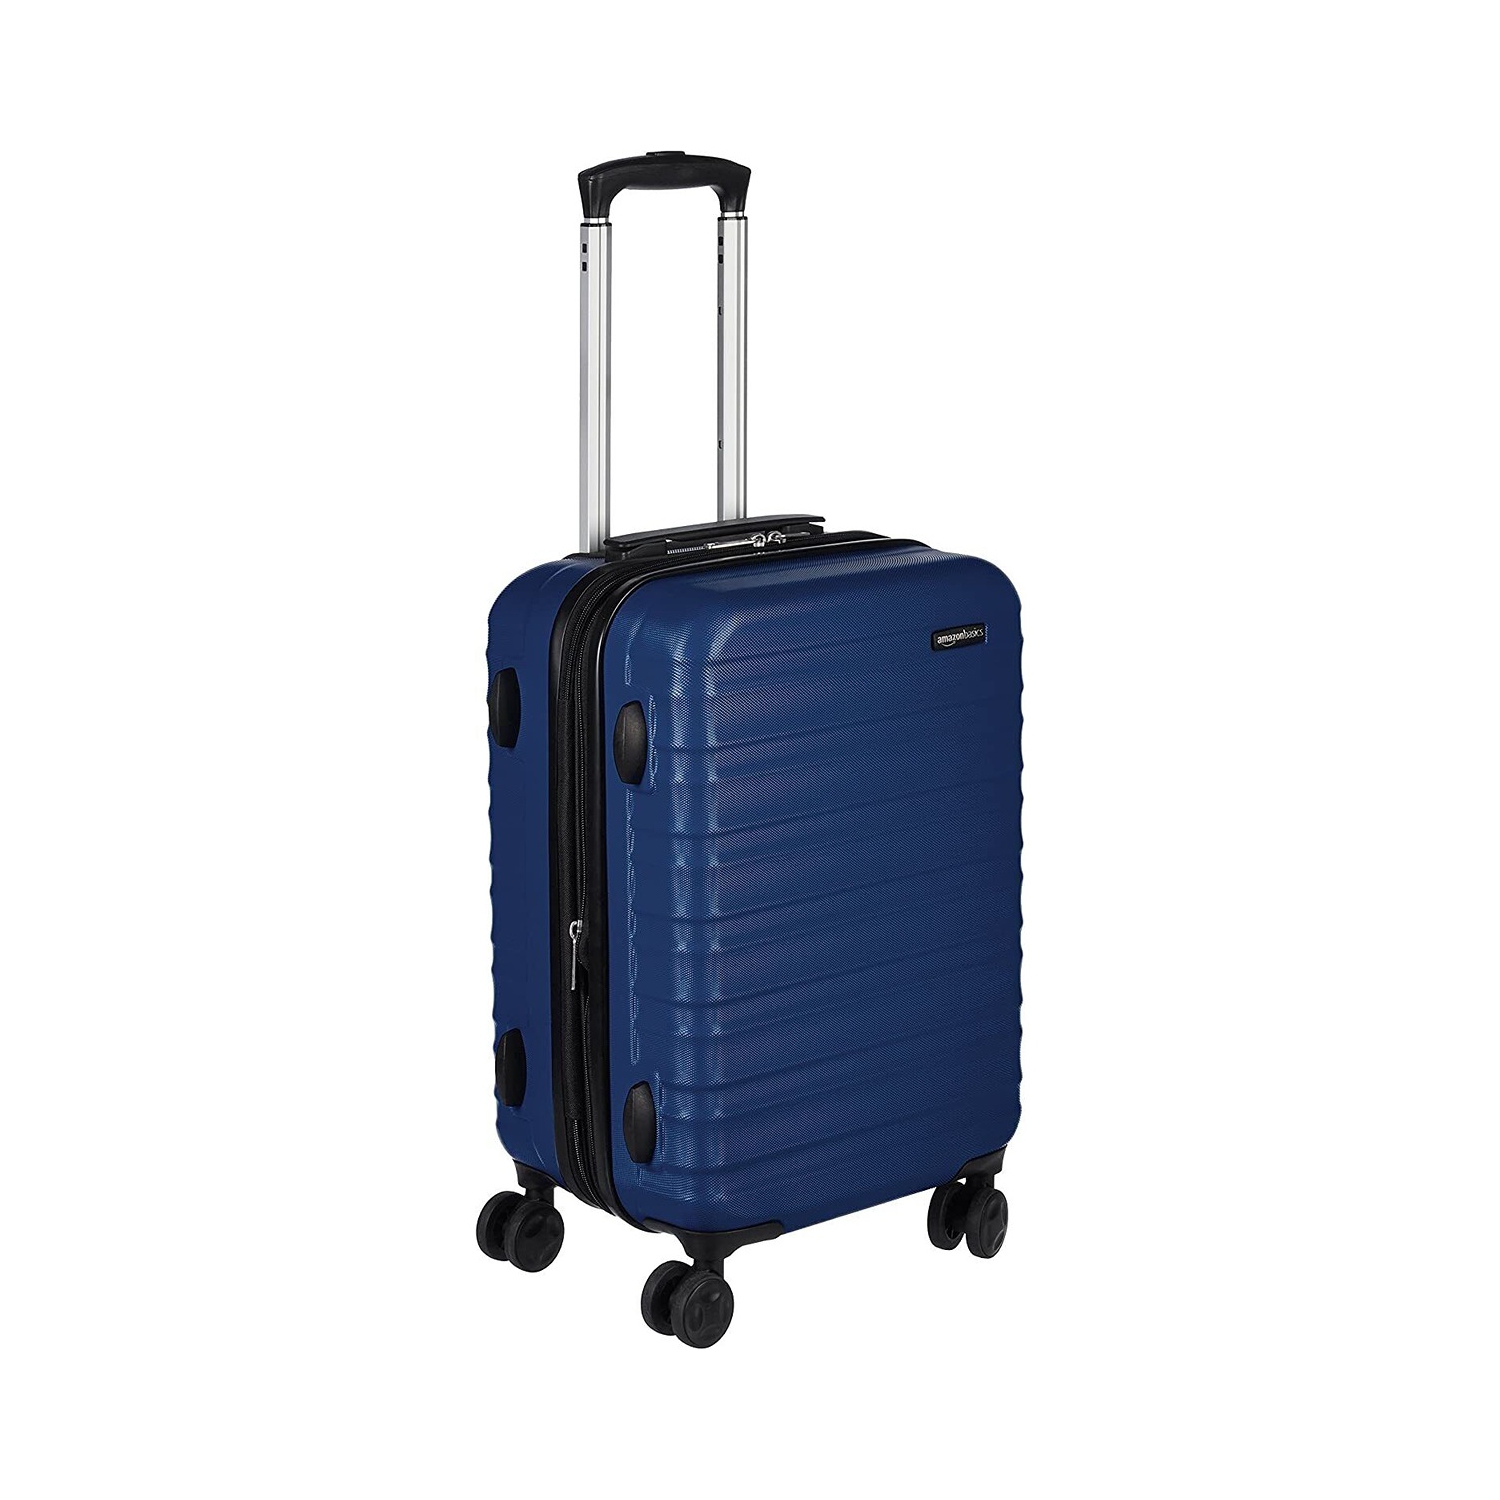 AmazonBasics 20 Inches Hardside Carry-On Spinner Travel Luggage - Navy Blue